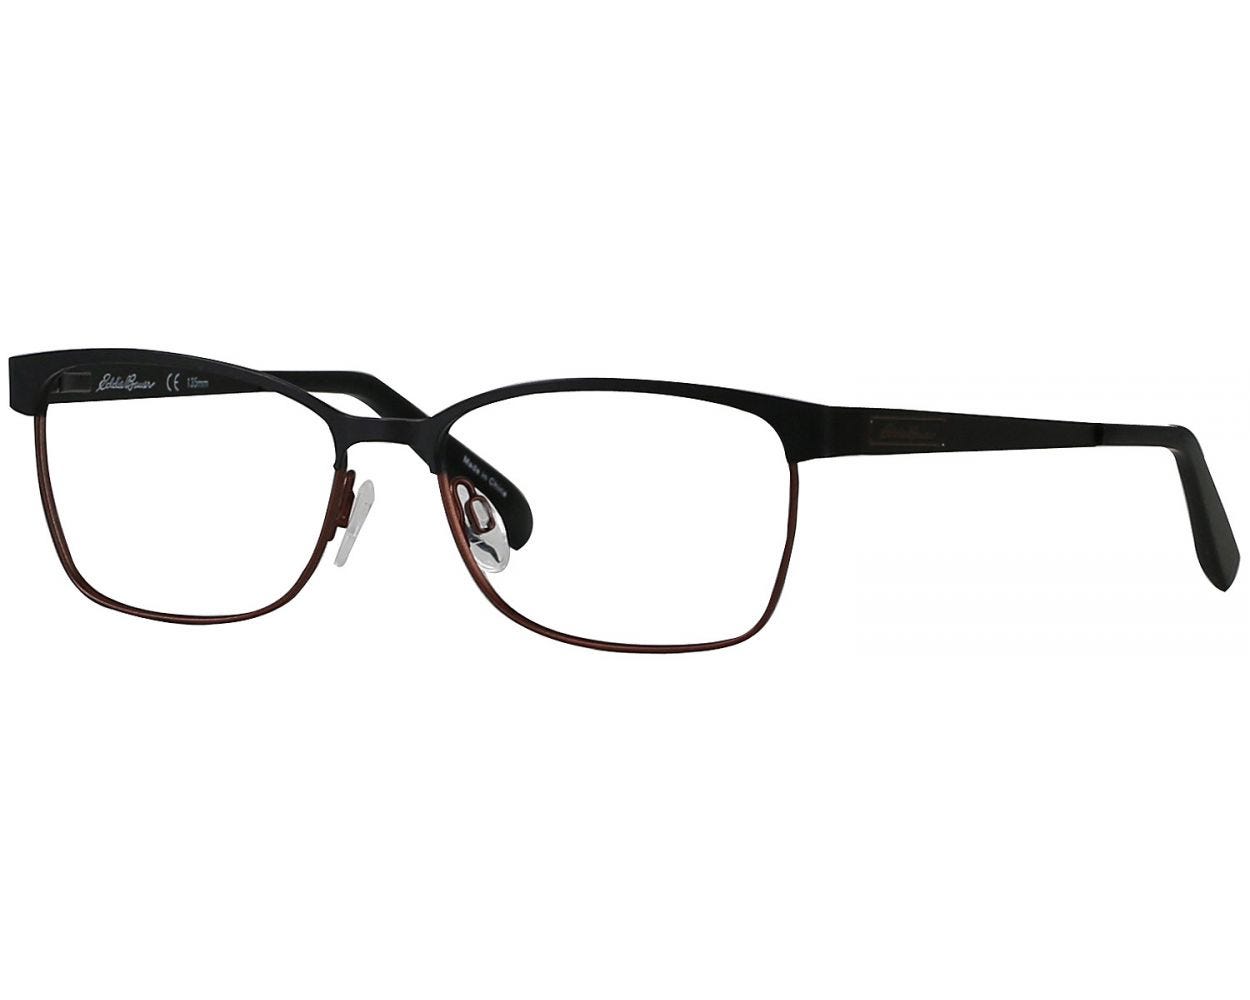 Eddie Bauer Eyeglasses 144231-c